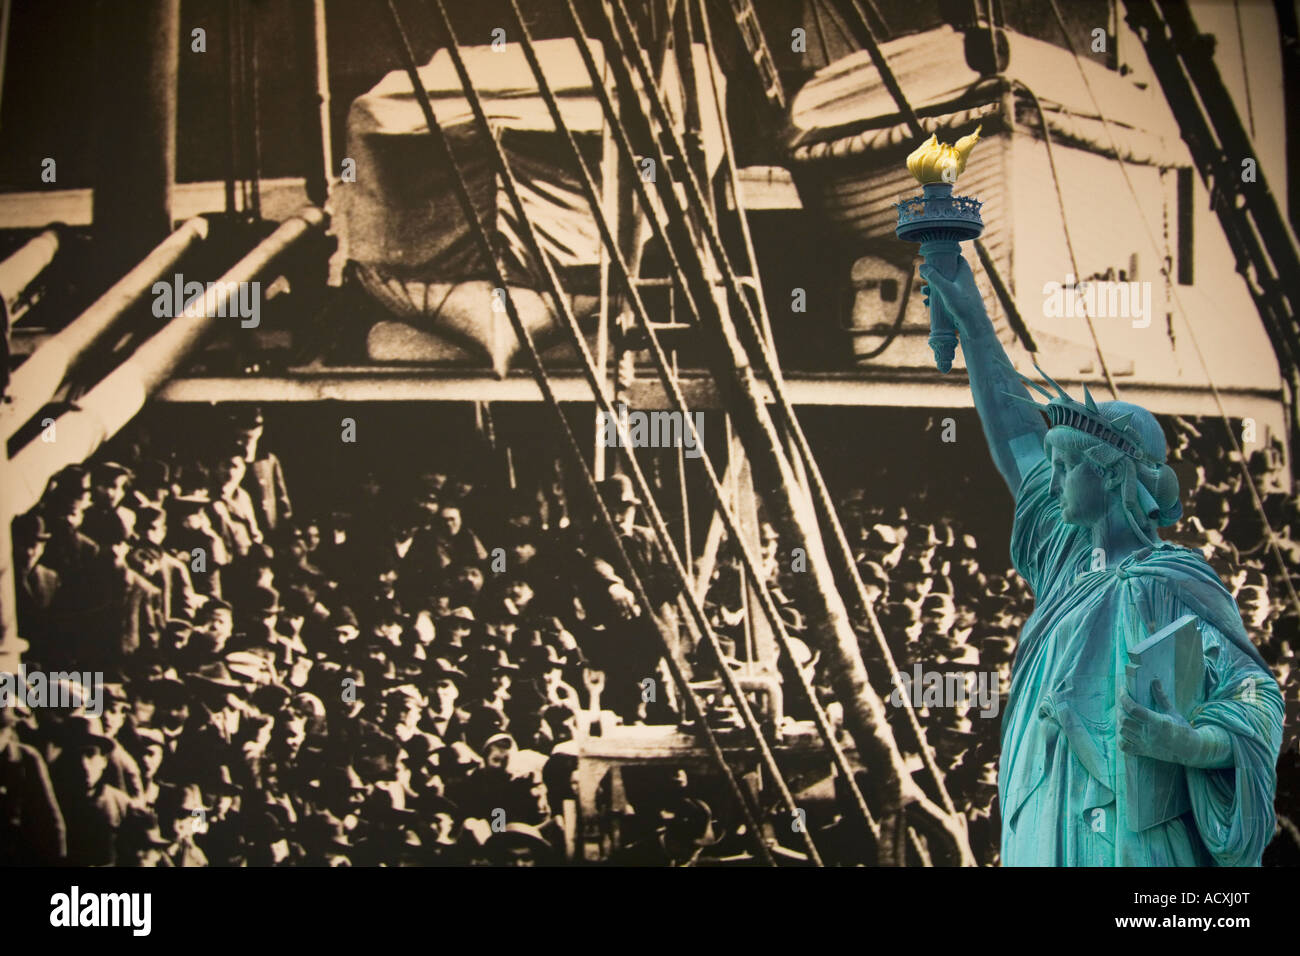 "Statue of Liberty" Einwanderung Einwanderer Komposit Lady Liberty begrüßt Einwanderer aus Europa nach New York Harbor Hafen NY Stockfoto